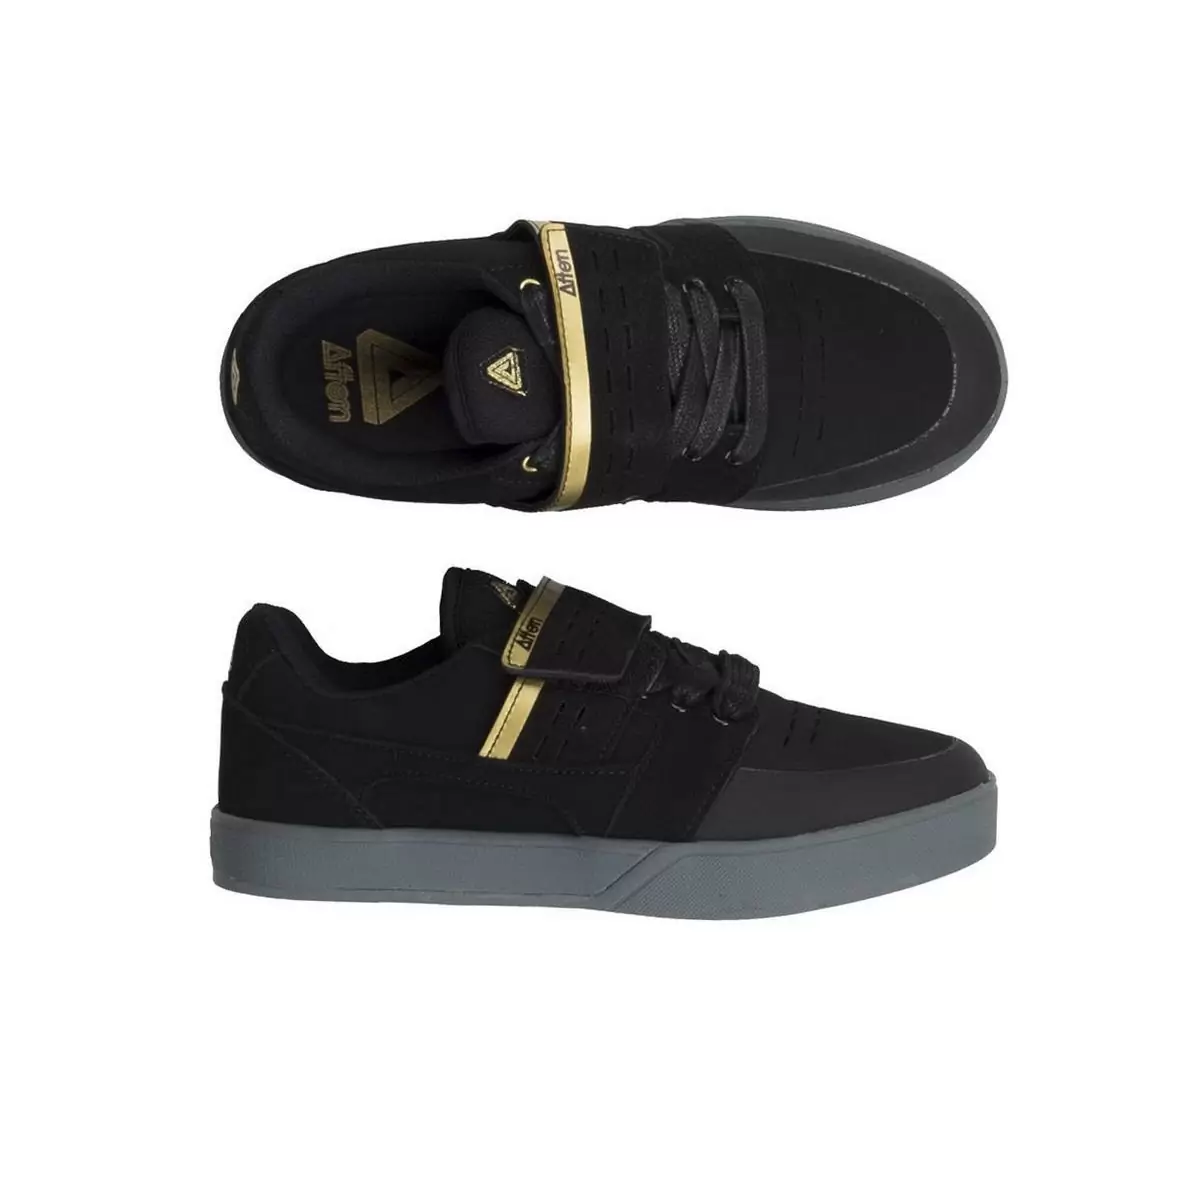 MTB Shoes Vectal SPD Black/Gold Size 40 - image